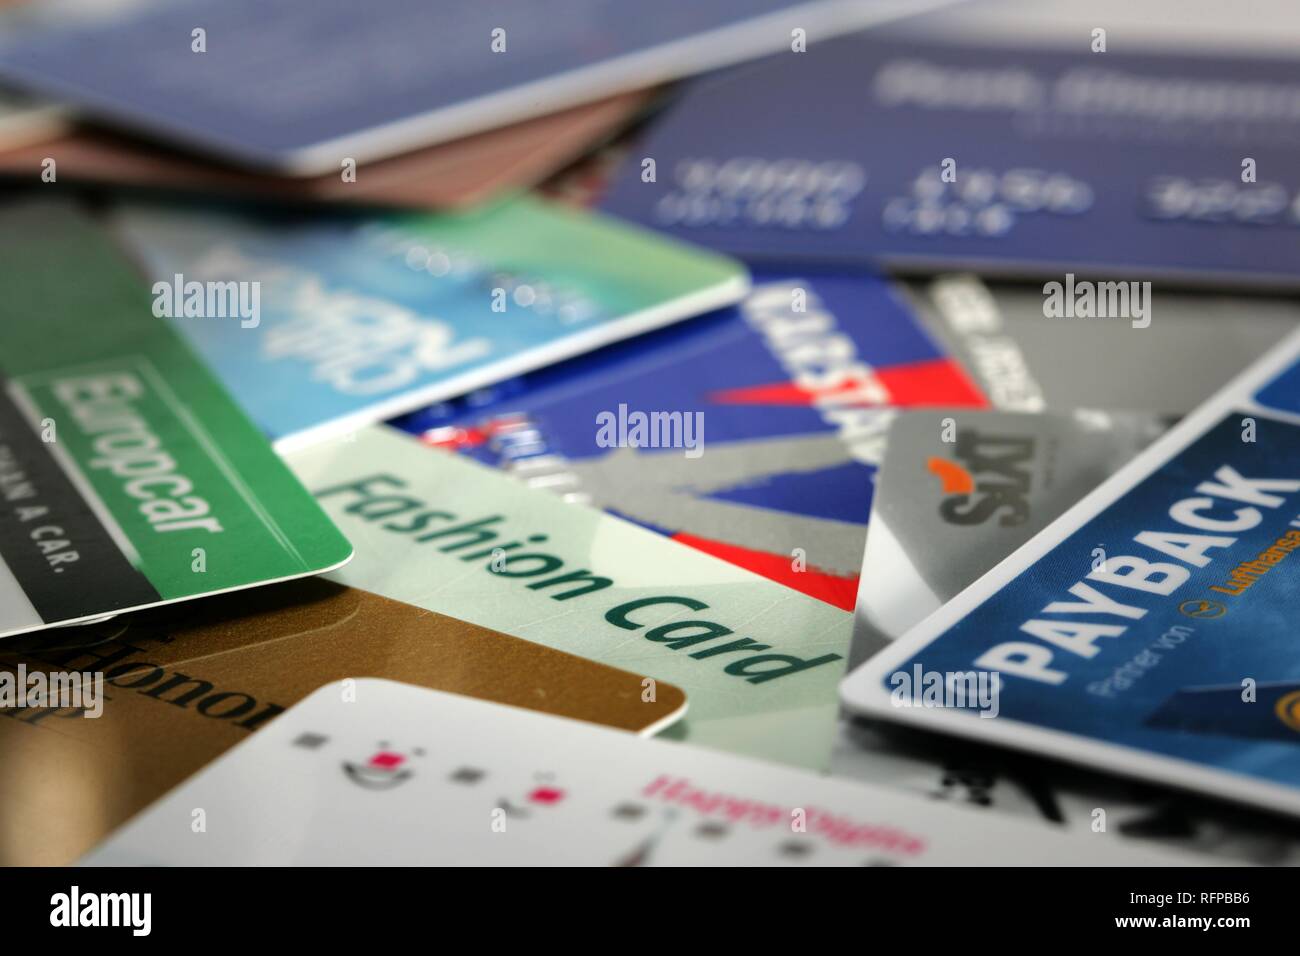 DEU, Germania : carte bonus, carte sconto di diverse compagnie. Foto Stock